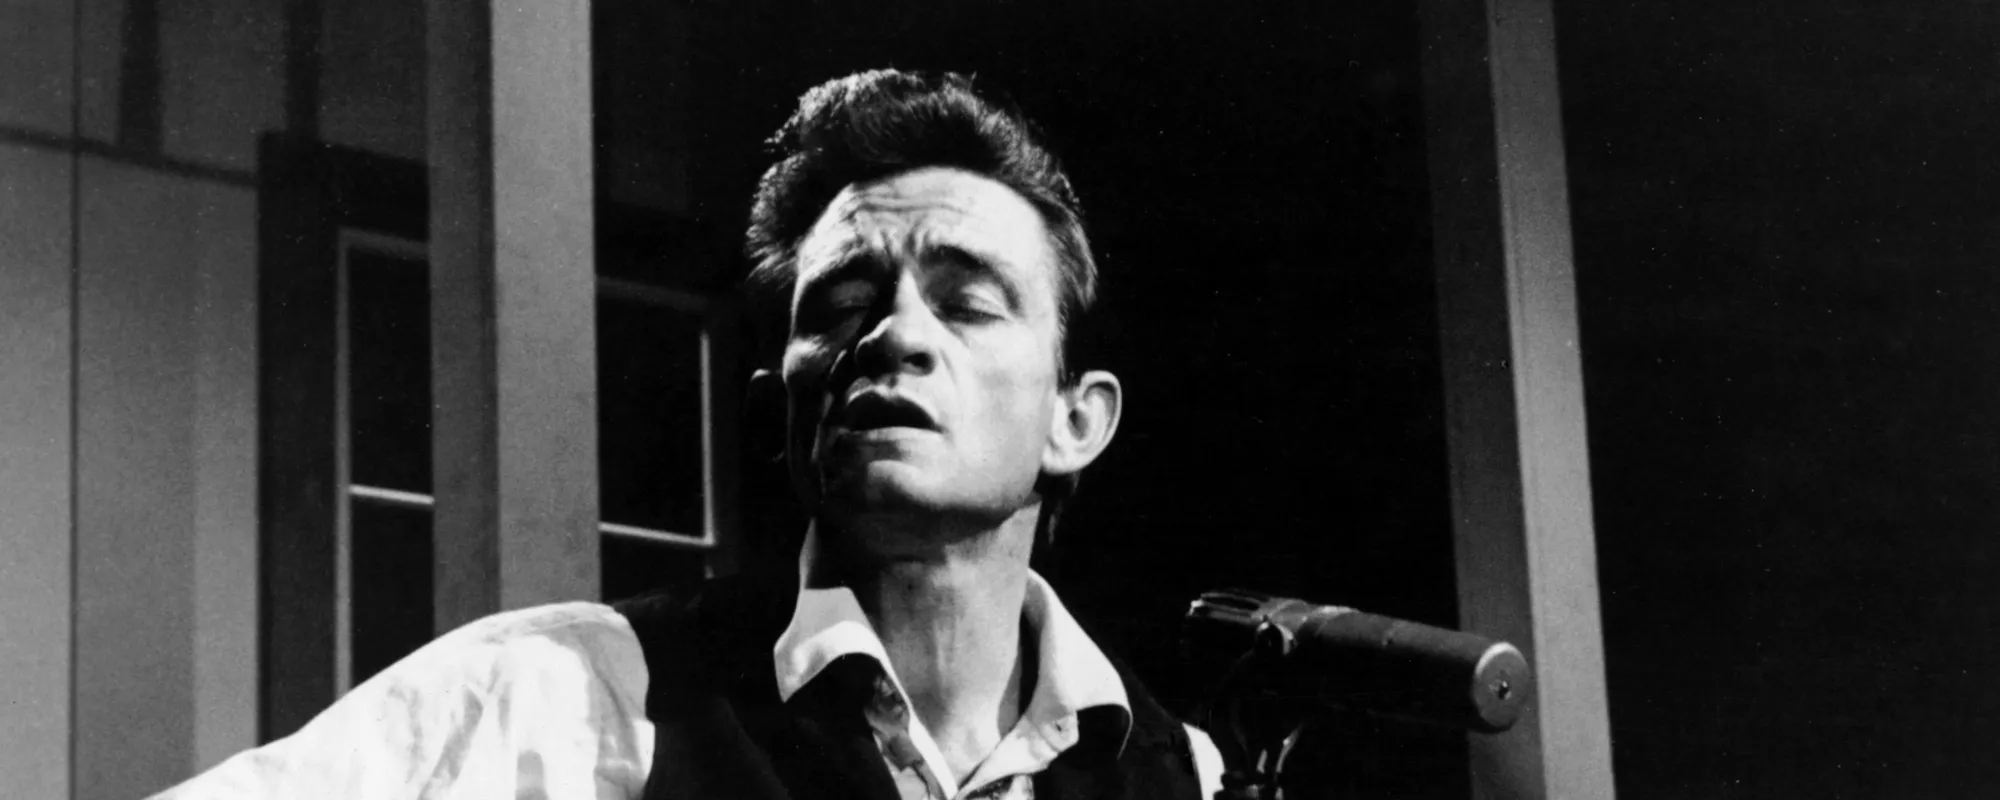 Remember When: Johnny Cash Played a Career-Defining Set at Folsom Prison